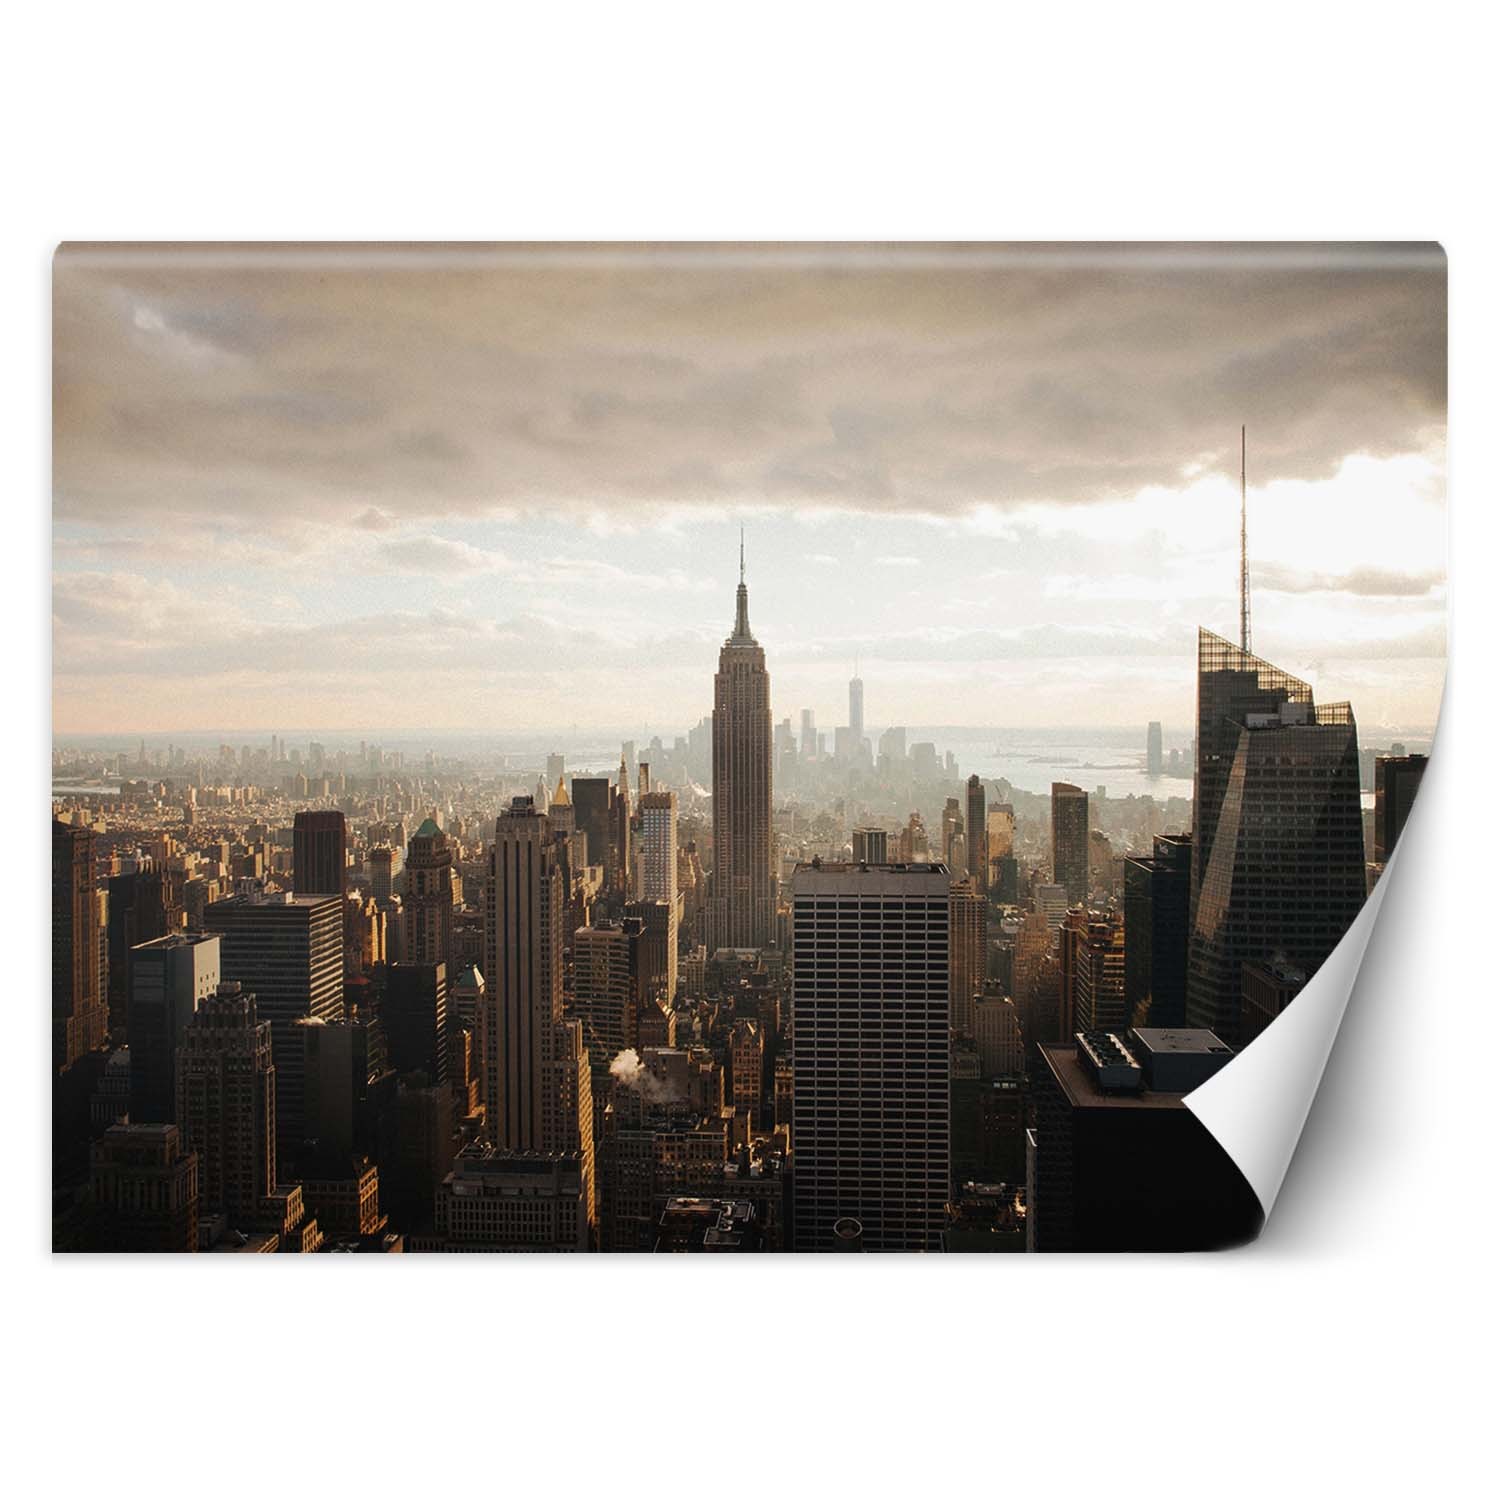 Trend24 – Behang – New York – Manhattan – Behangpapier – Fotobehang – Behang Woonkamer – 450x315x2 cm – Incl. behanglijm